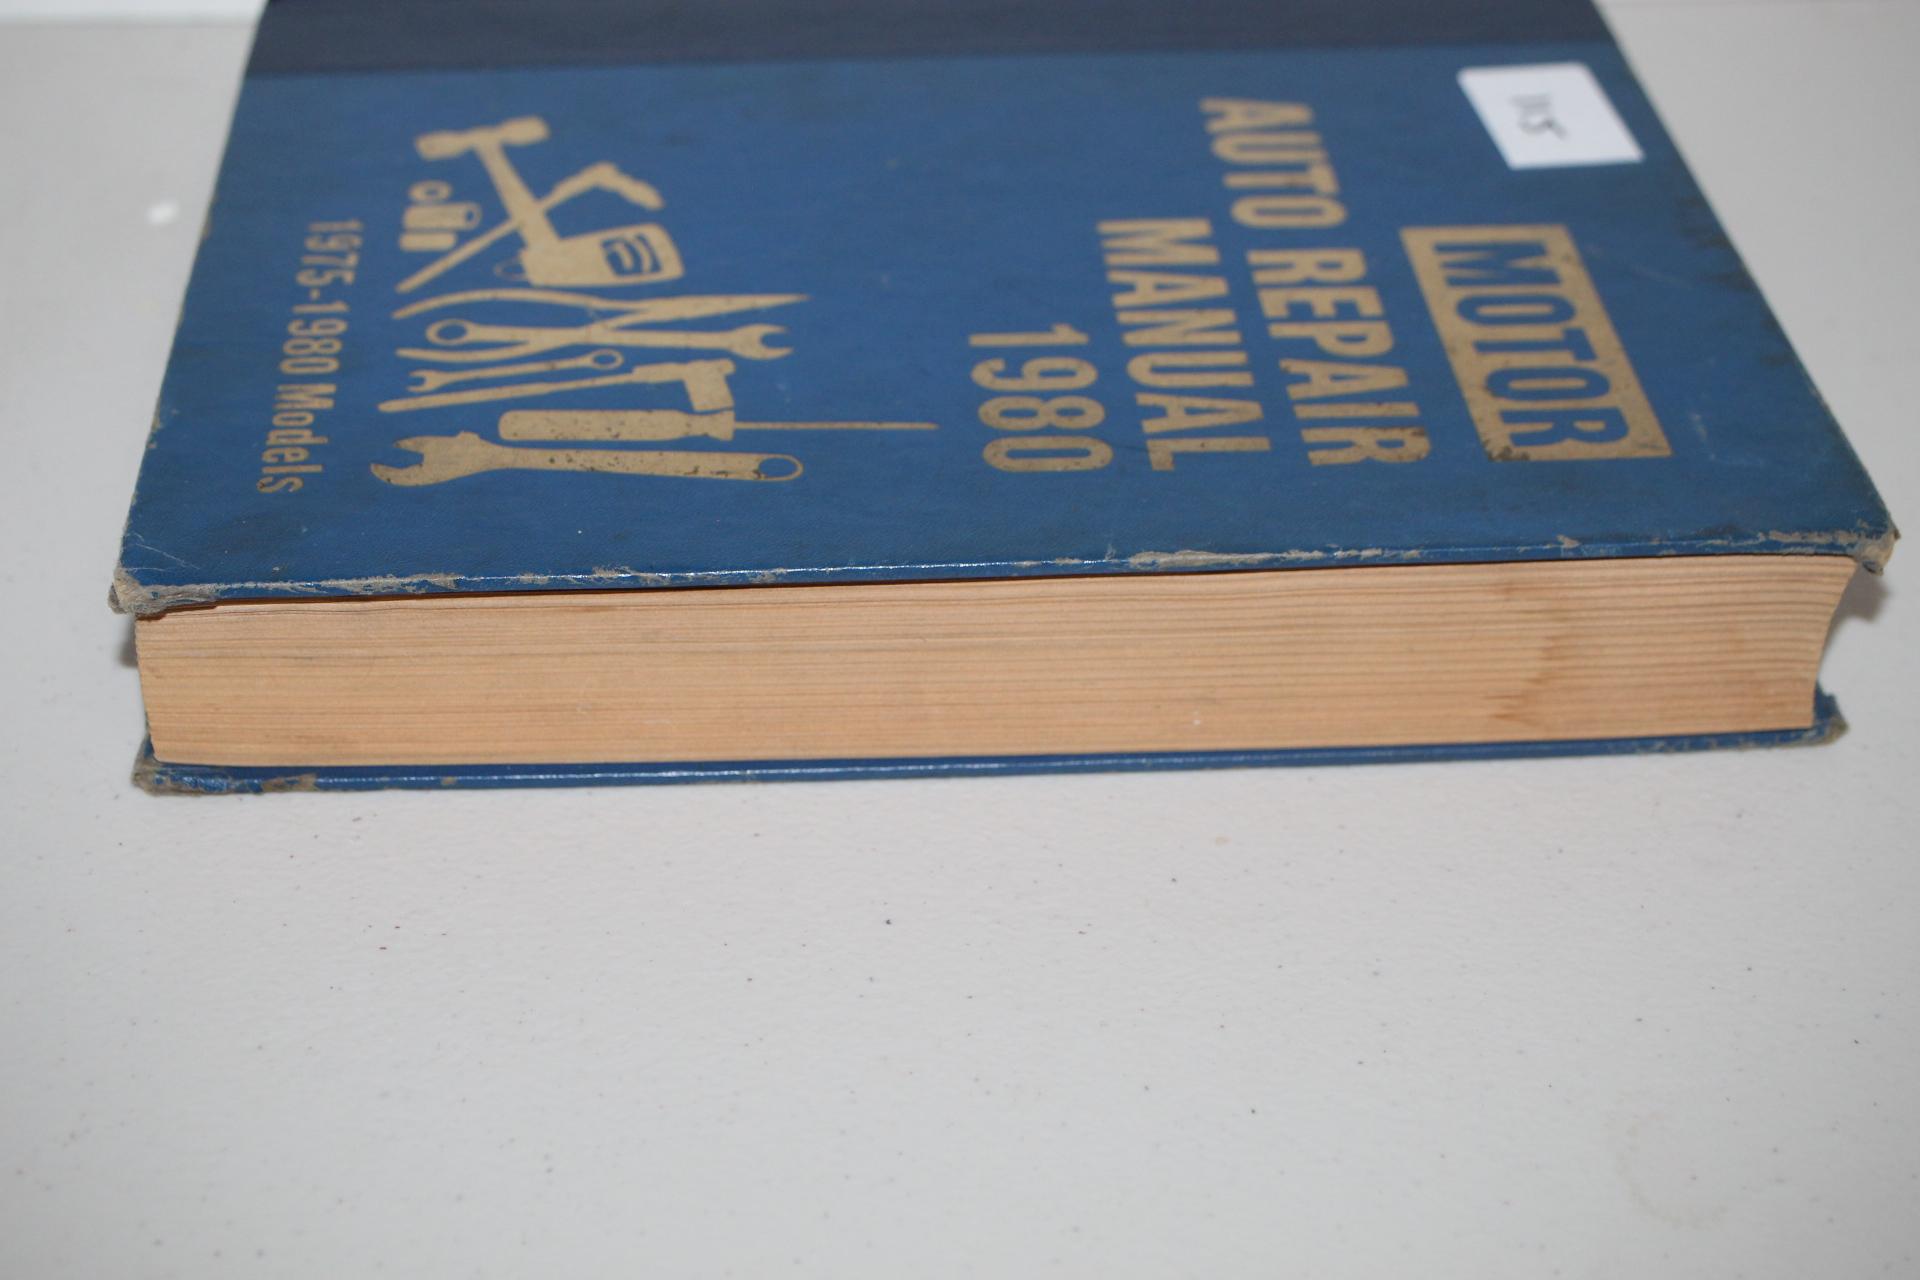 Auto Repair Manual 1980 Book, 1975-1980 Models, 43rd Edition, 1979, Motor, Hard Cover